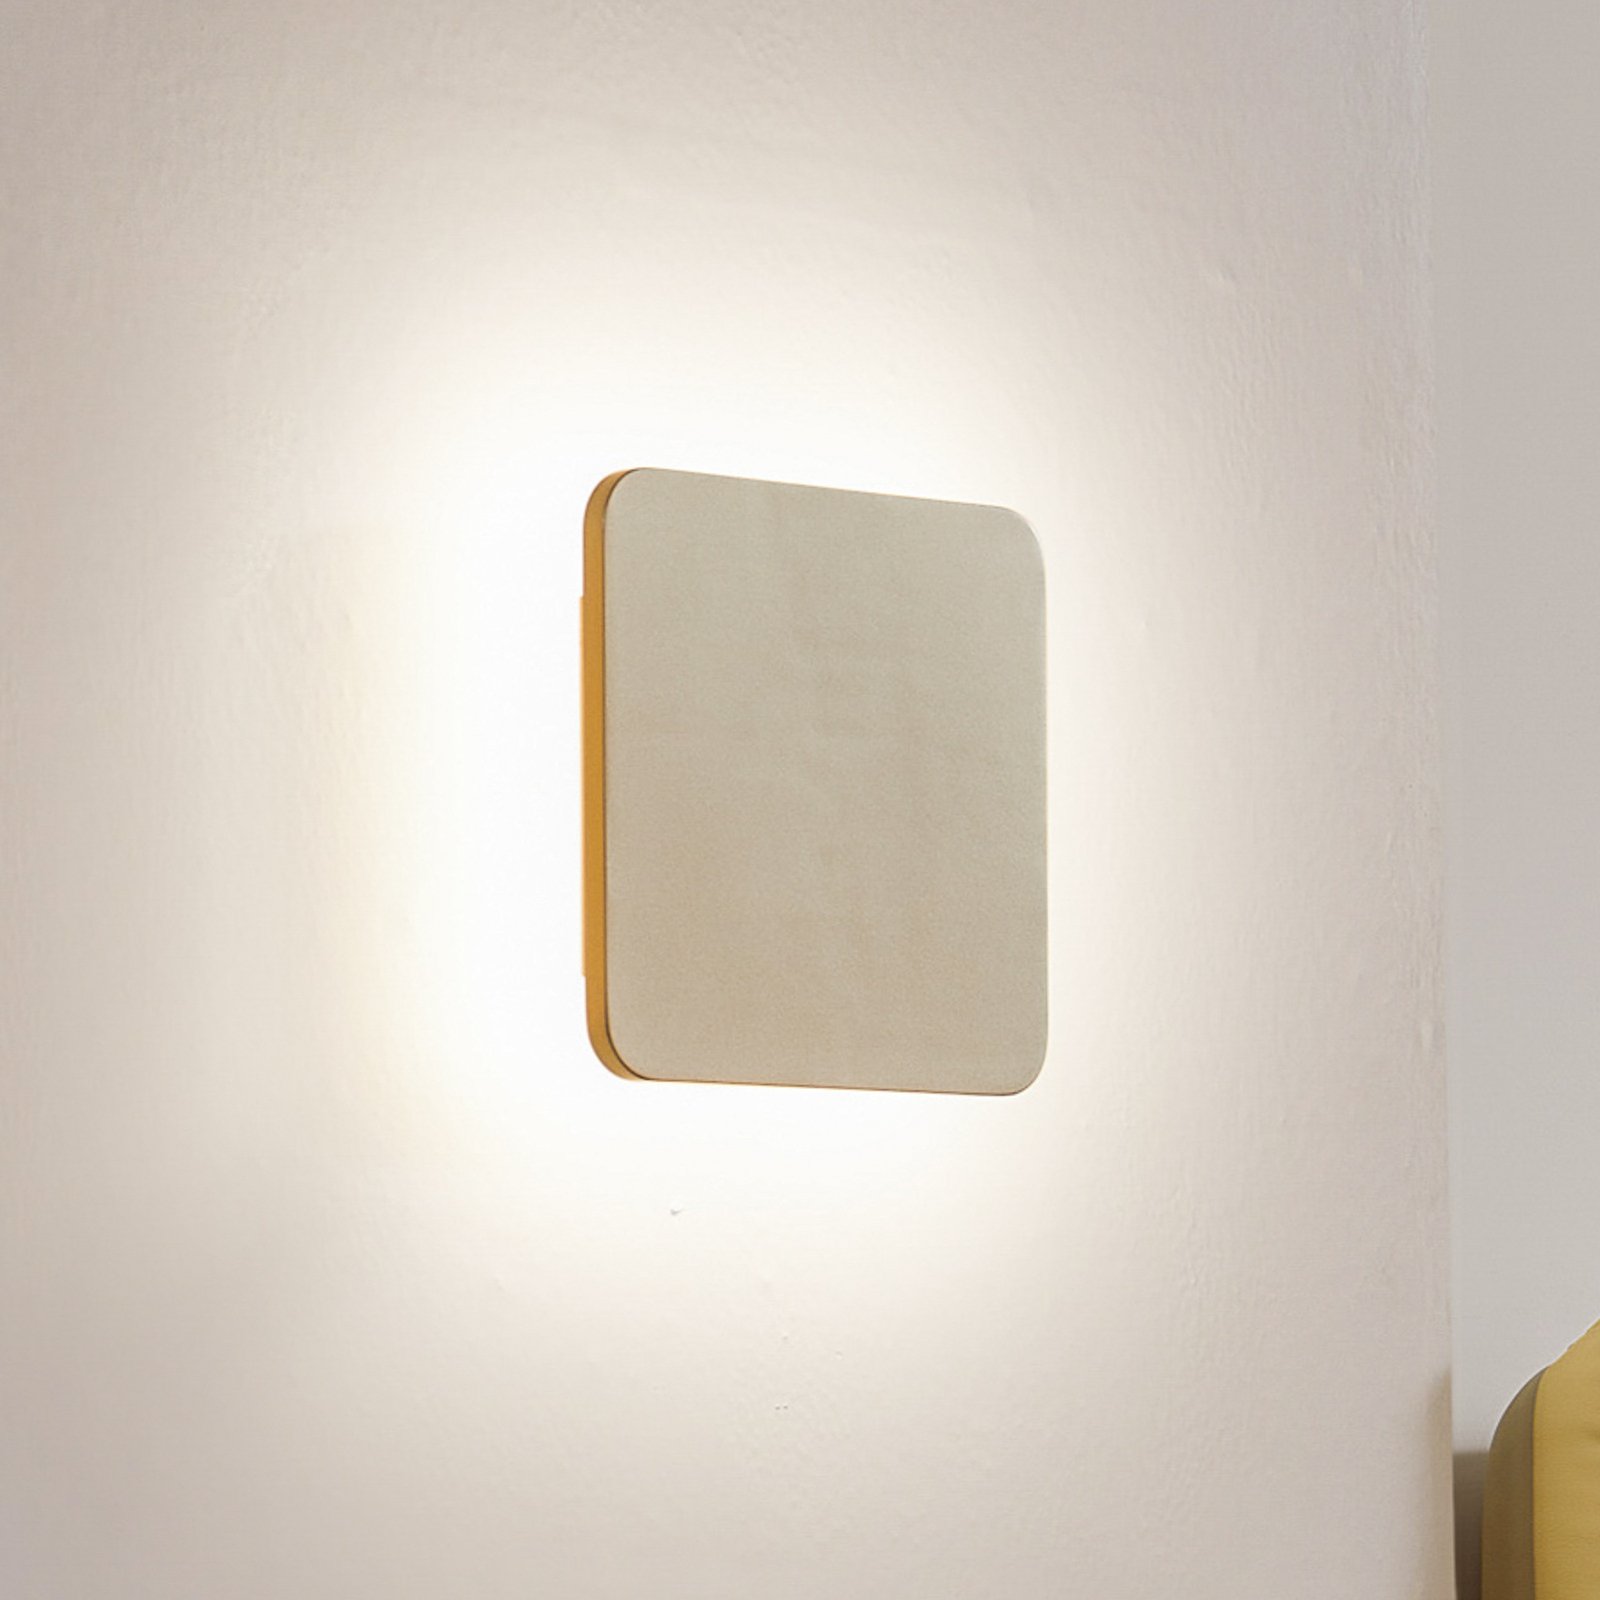 Lucande LED wall light Elrik, dourado, 22 cm, metal